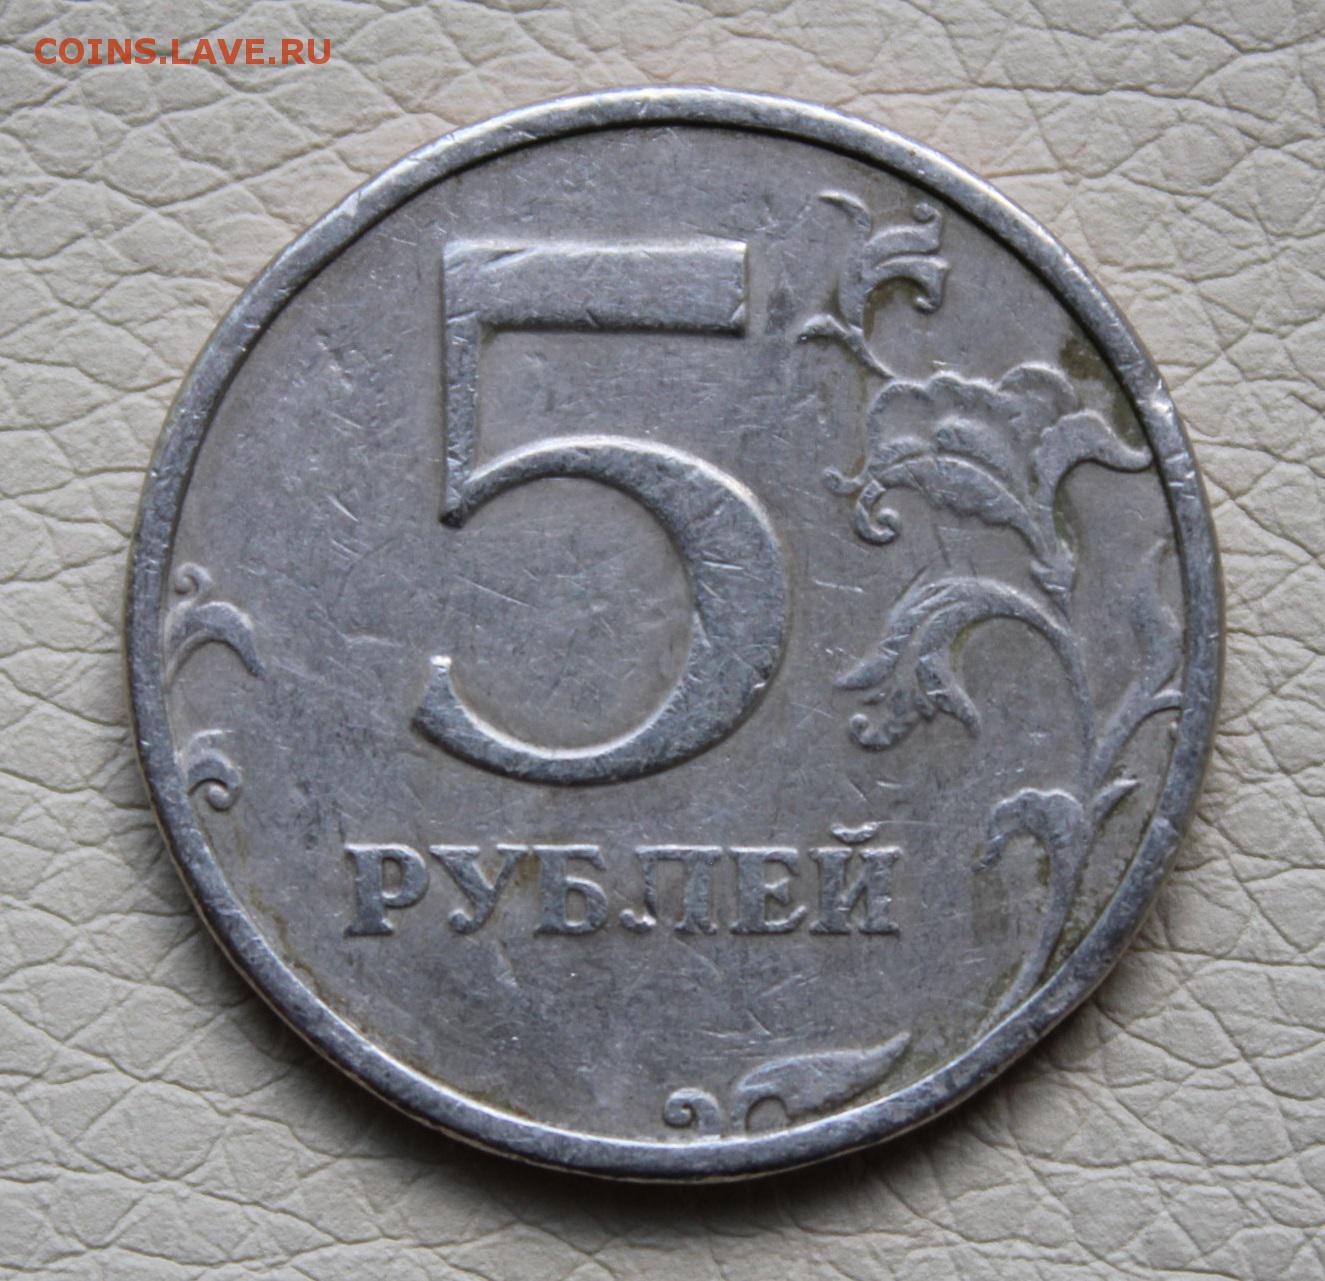 37 5 рублей. 5 Рублей 1999 СПМД. 5 Рублей 1999 года Санкт-Петербургского монетного двора. Монета 5 рублей 1999 СПМД. 5 Рублей 1999.